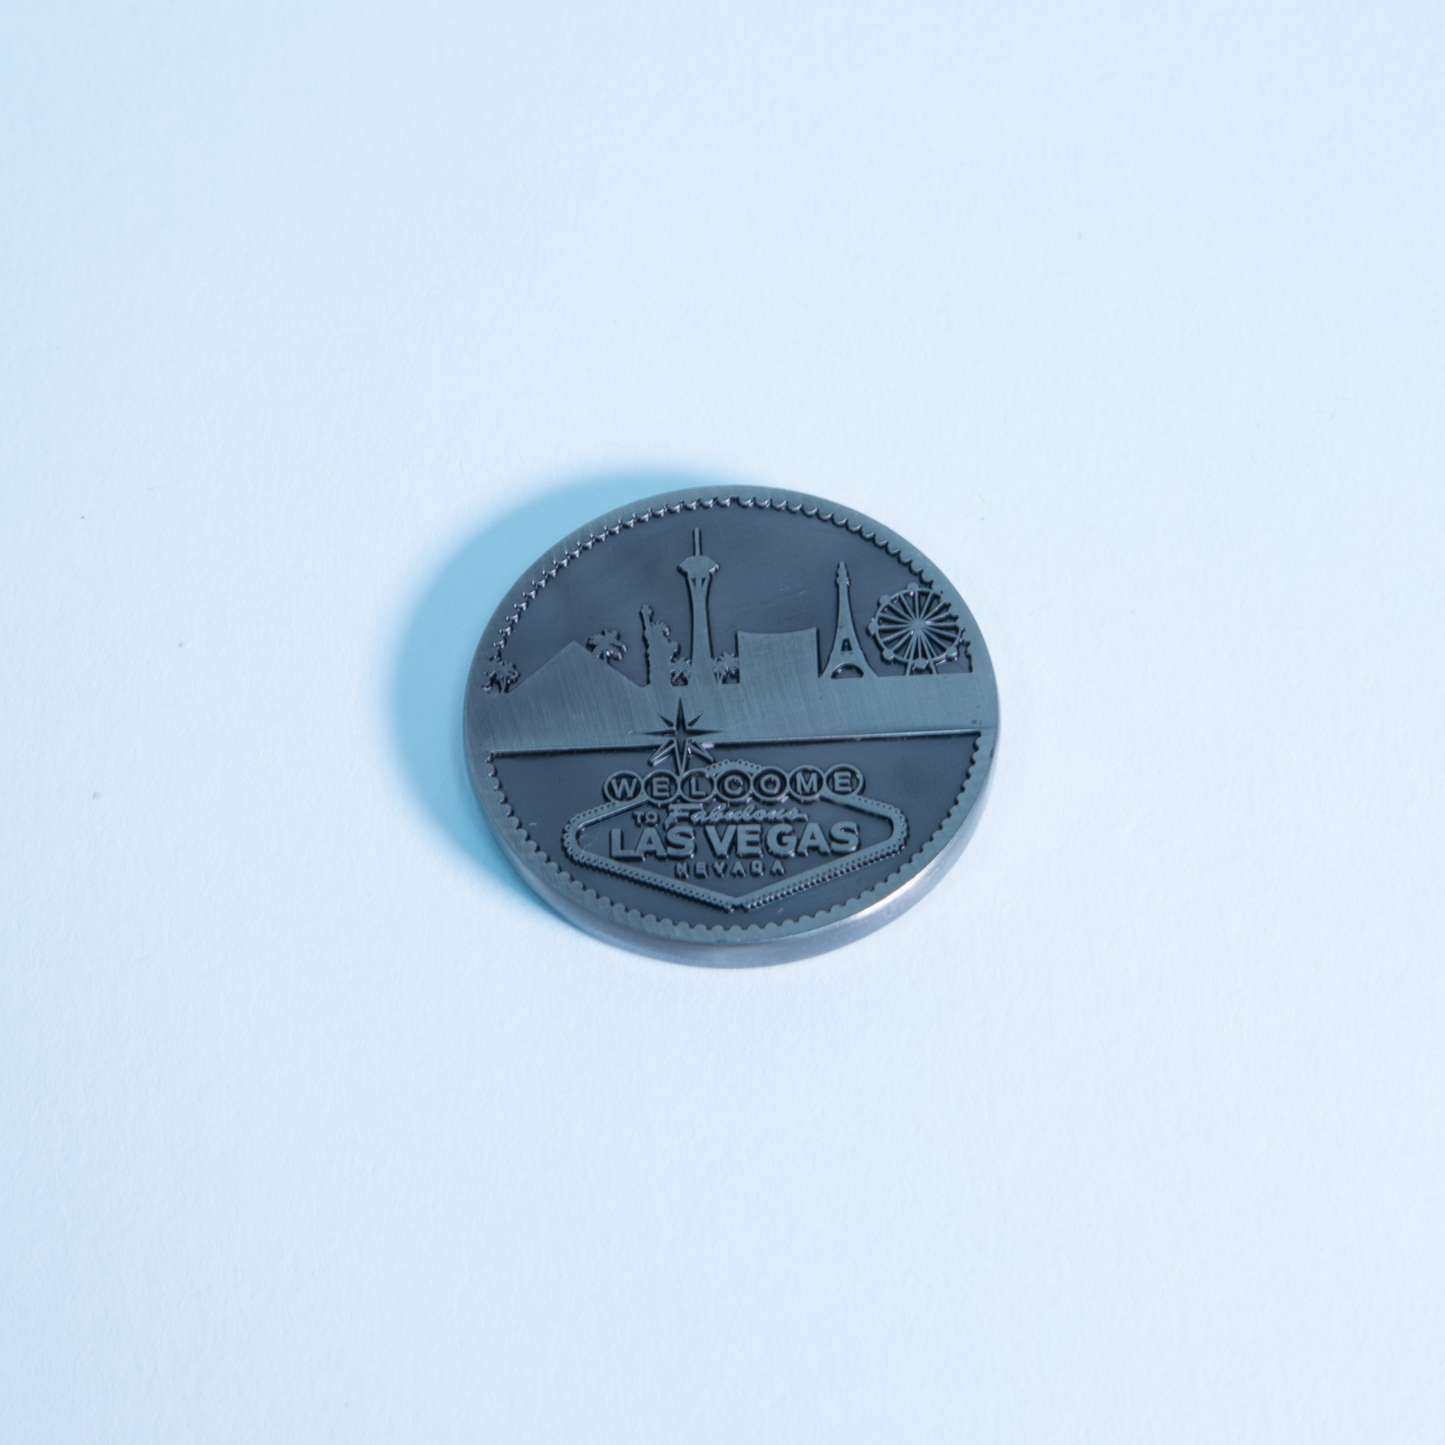 Las Vegas Collector Coin with Ball Marker